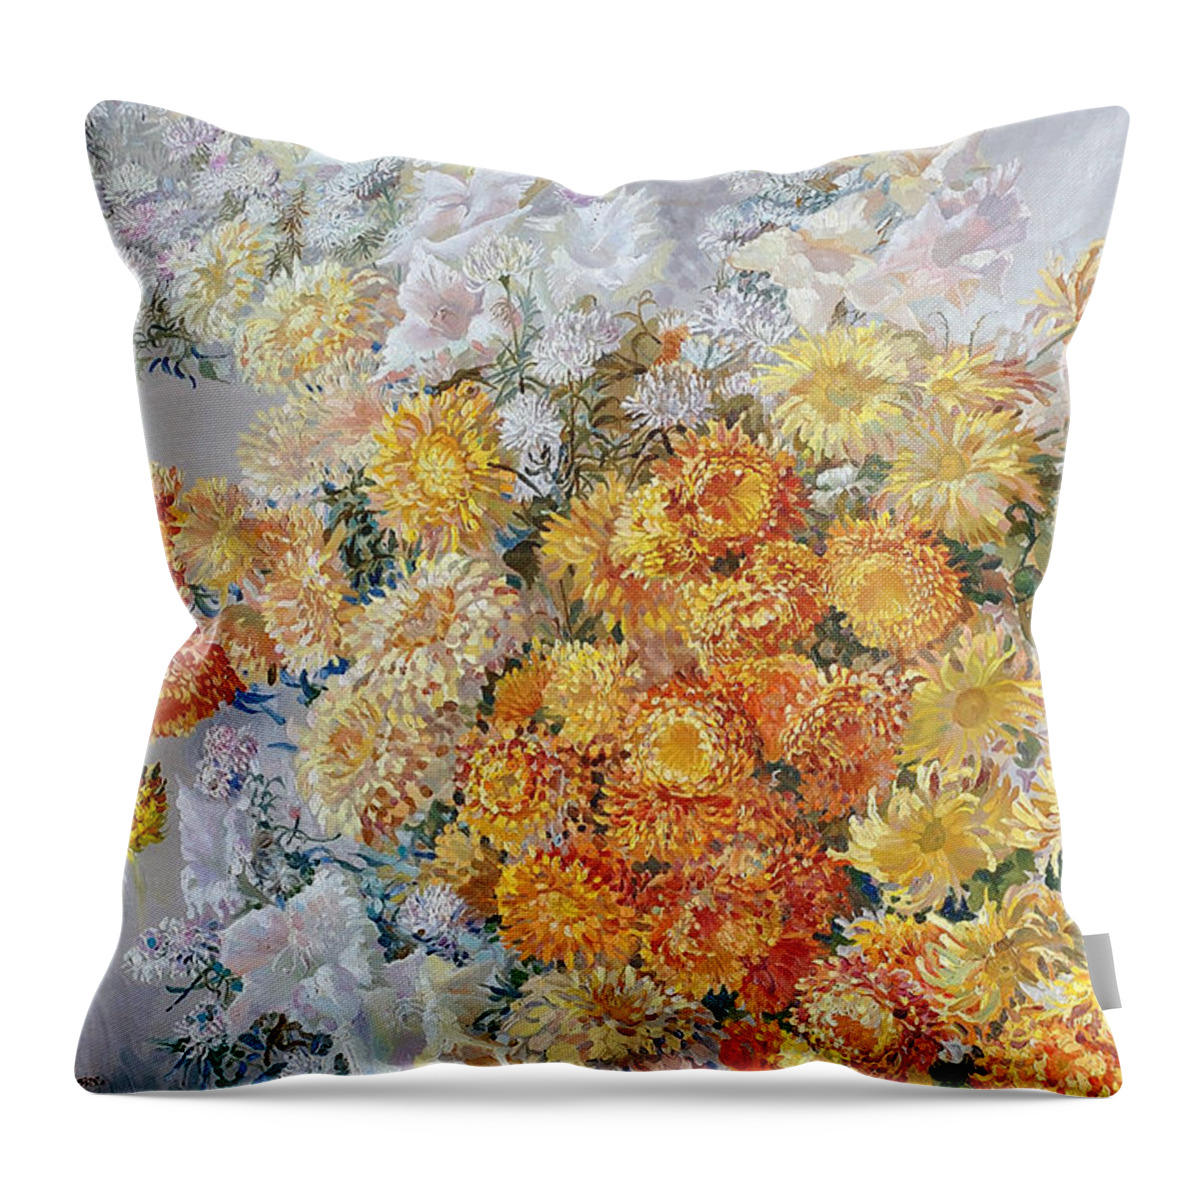 Maya Gusarina Throw Pillow featuring the painting Yellow Chrysanthemum by Maya Gusarina